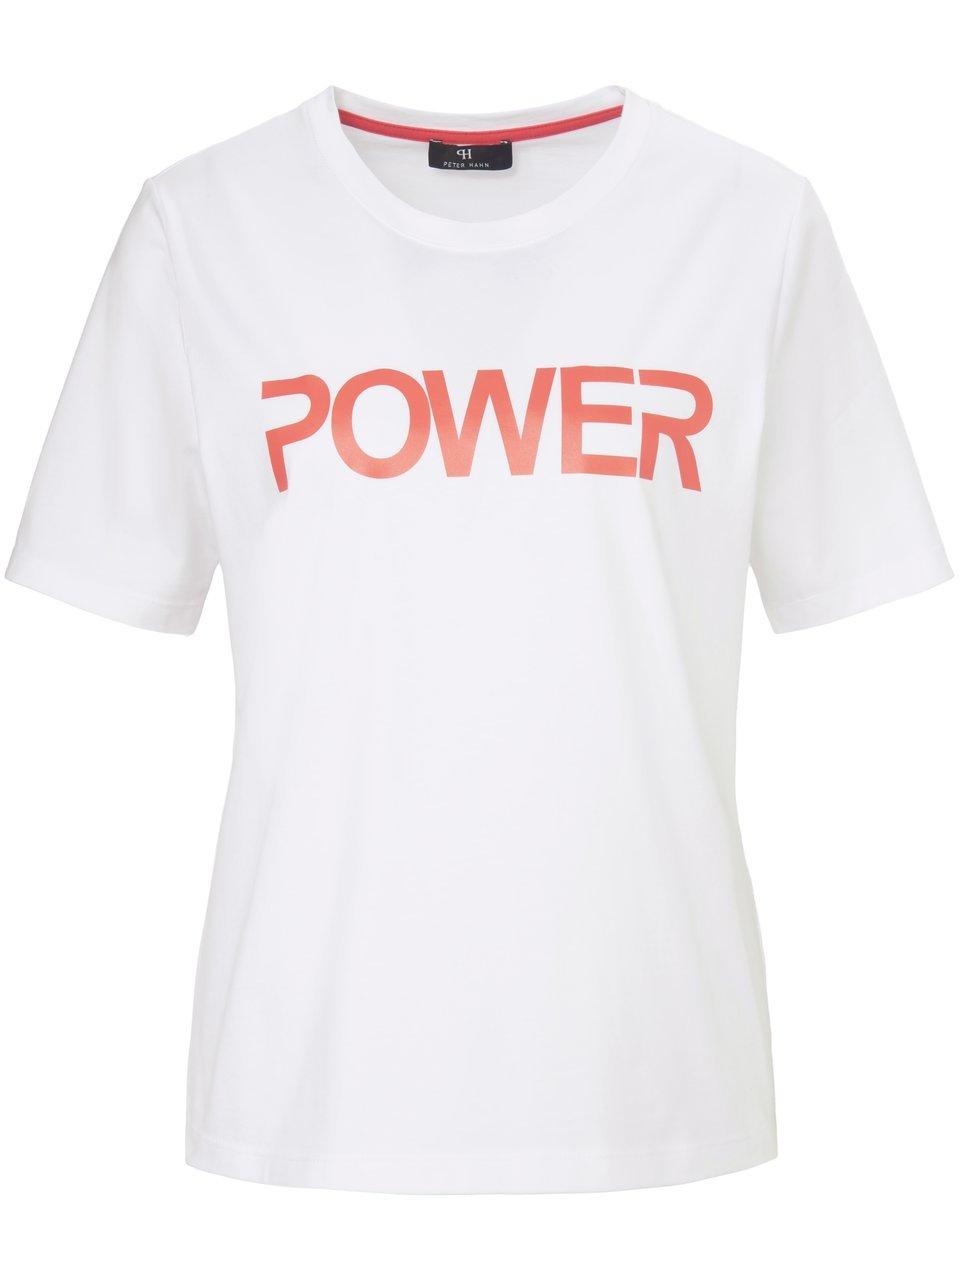 Le T-shirt inscription Power  Peter Hahn blanc